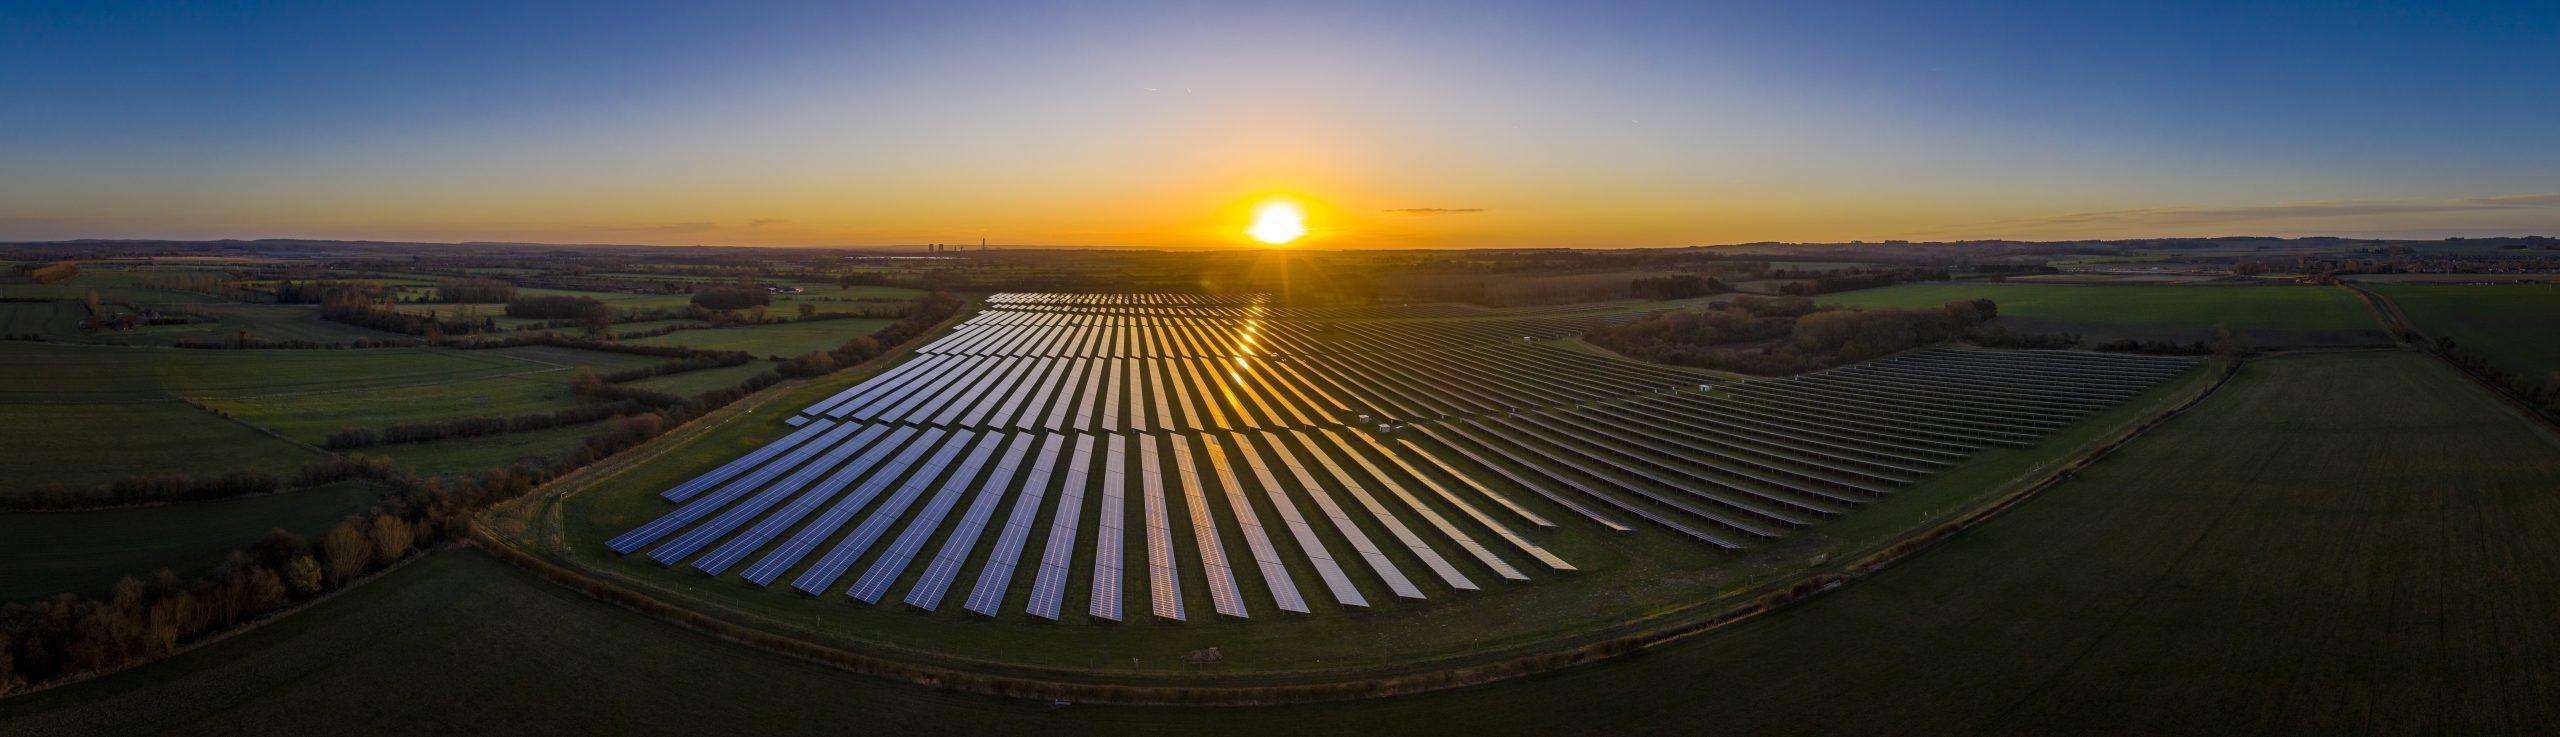 united states largest solar farm